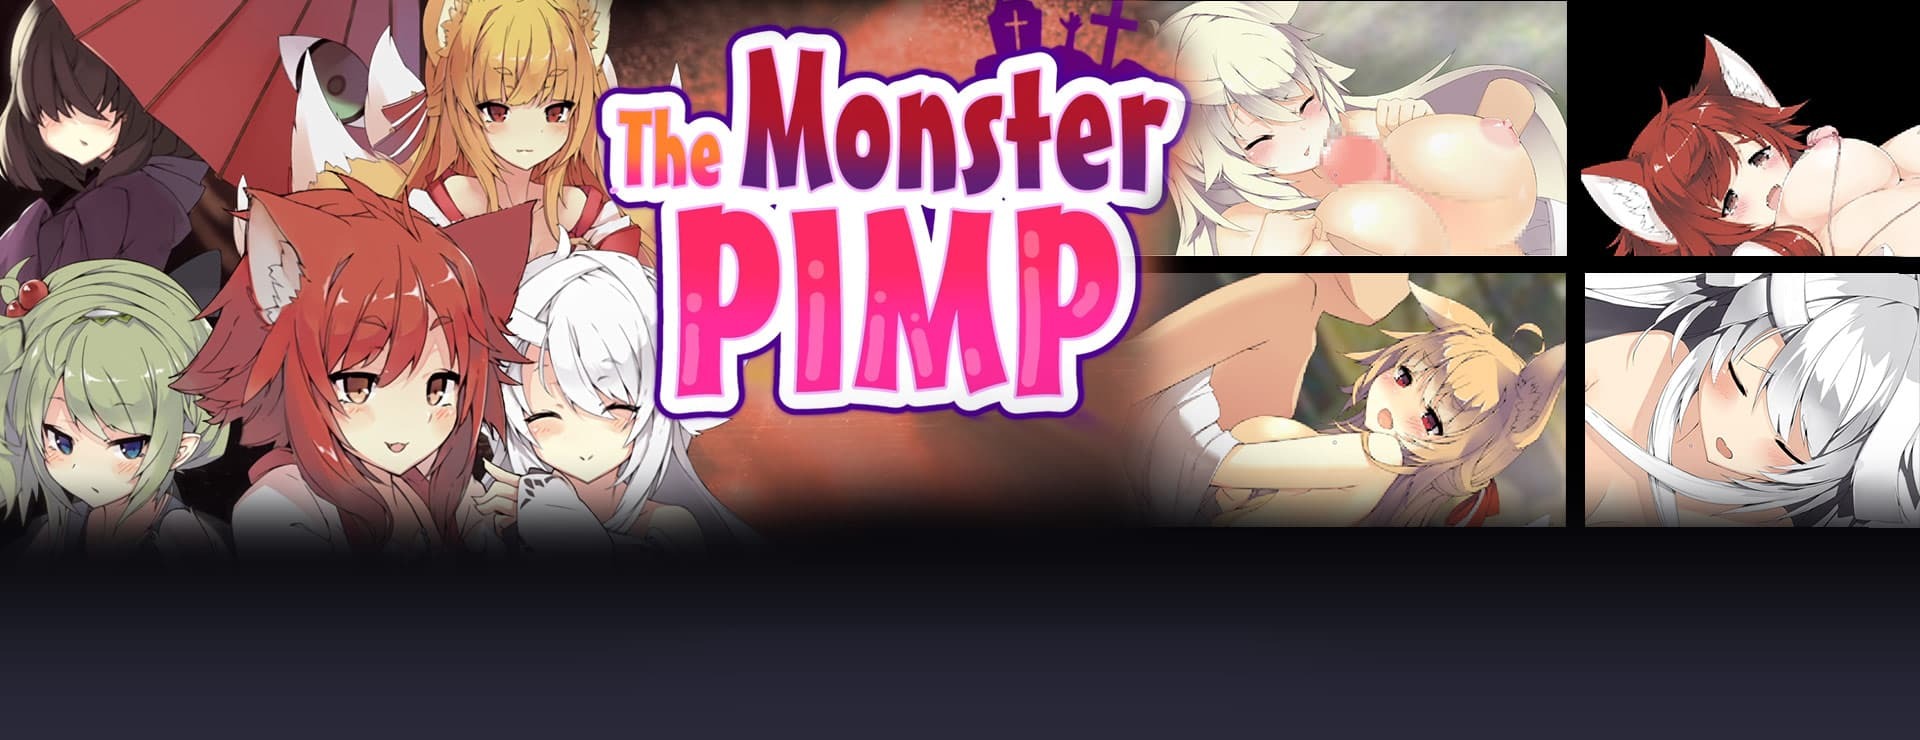 The Monster PIMP - RPG ゲーム